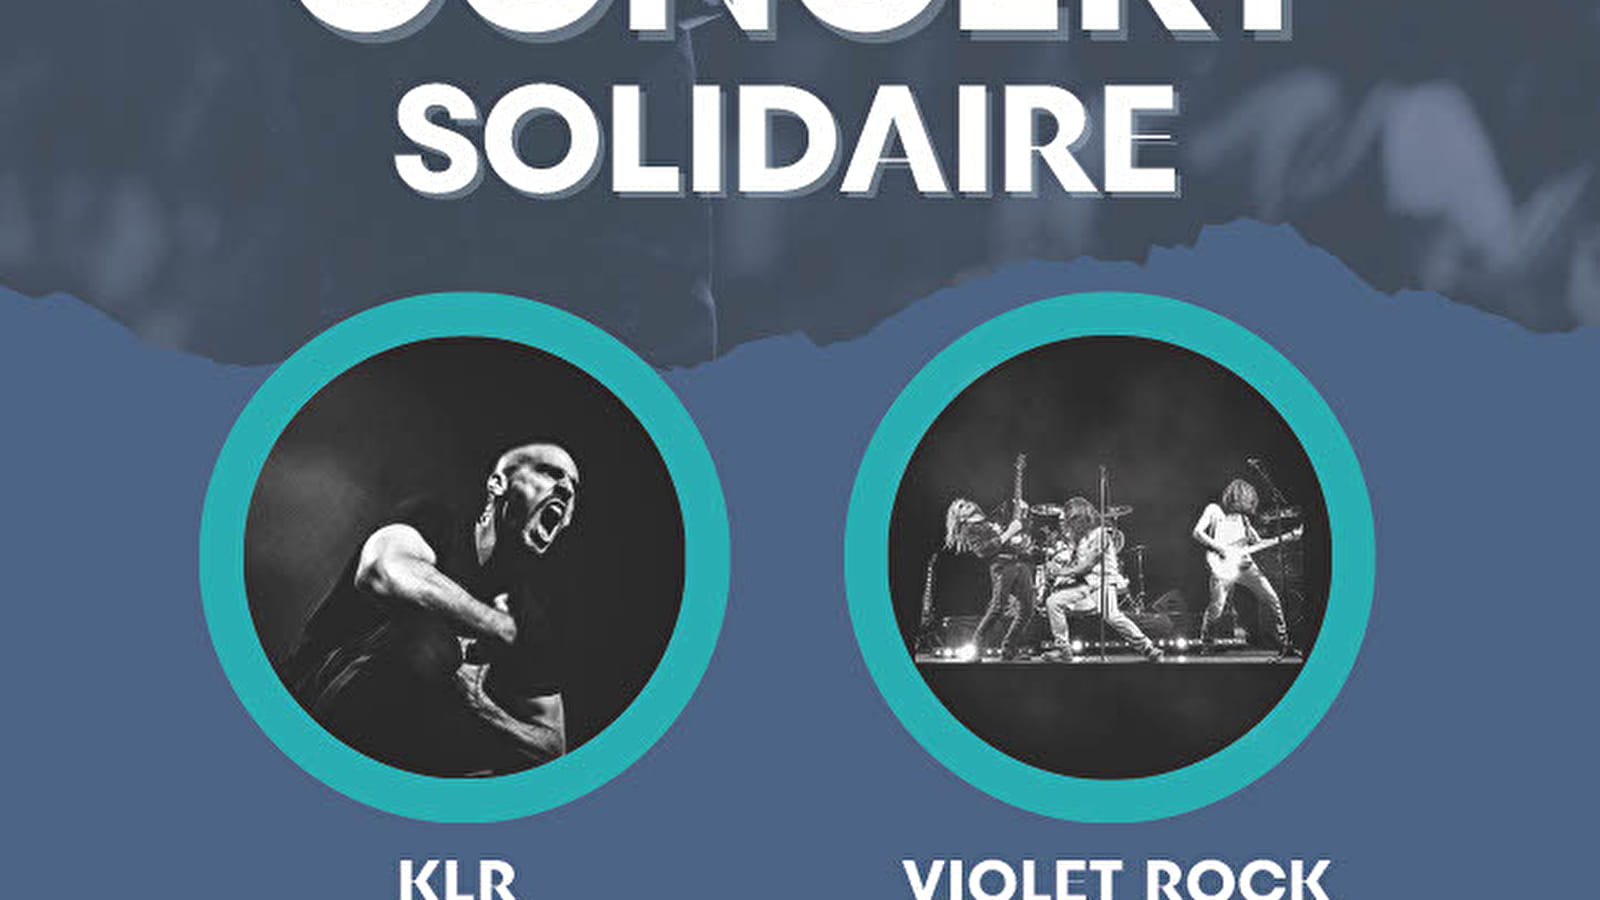 Concert Solidaire - EHCO Association